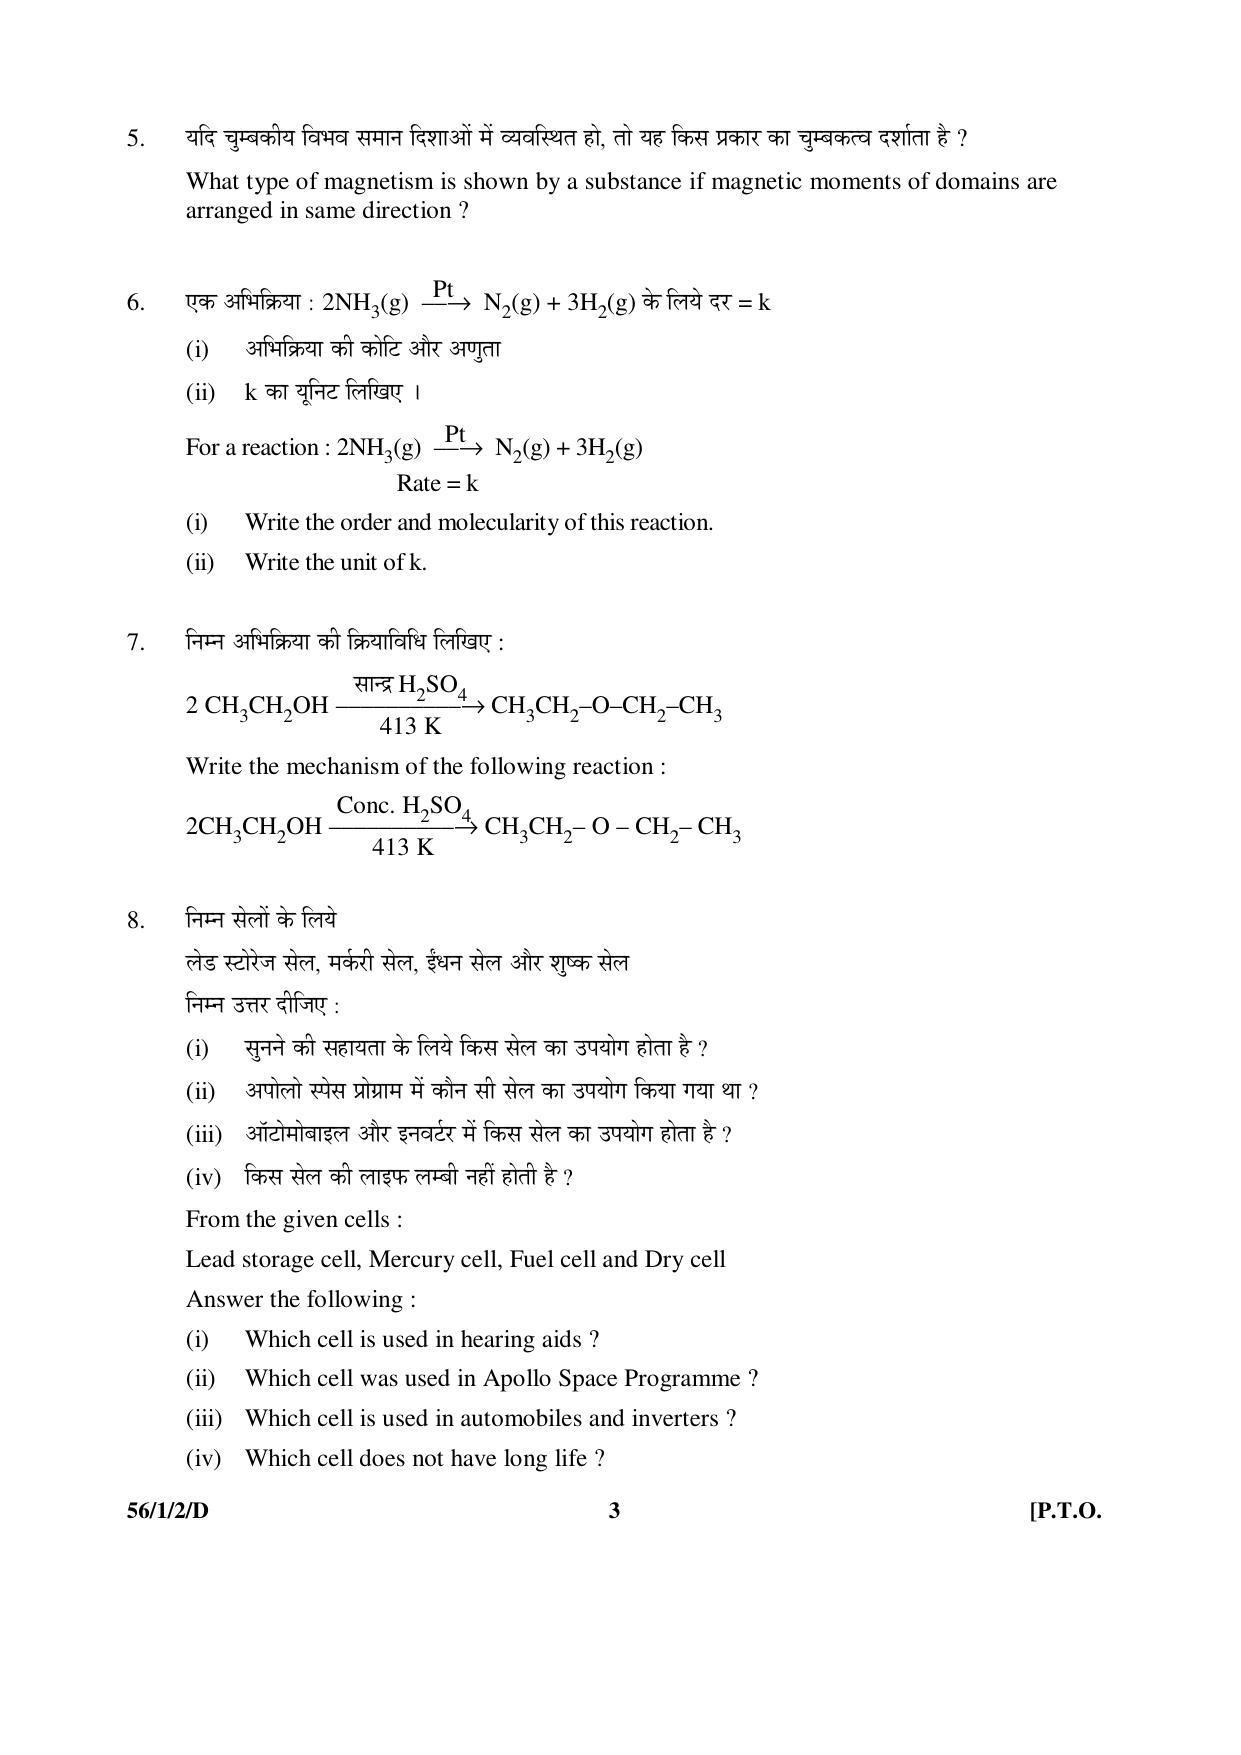 CBSE Class 12 56-1-2-D CHEMISTRY 2016 Question Paper - Page 3